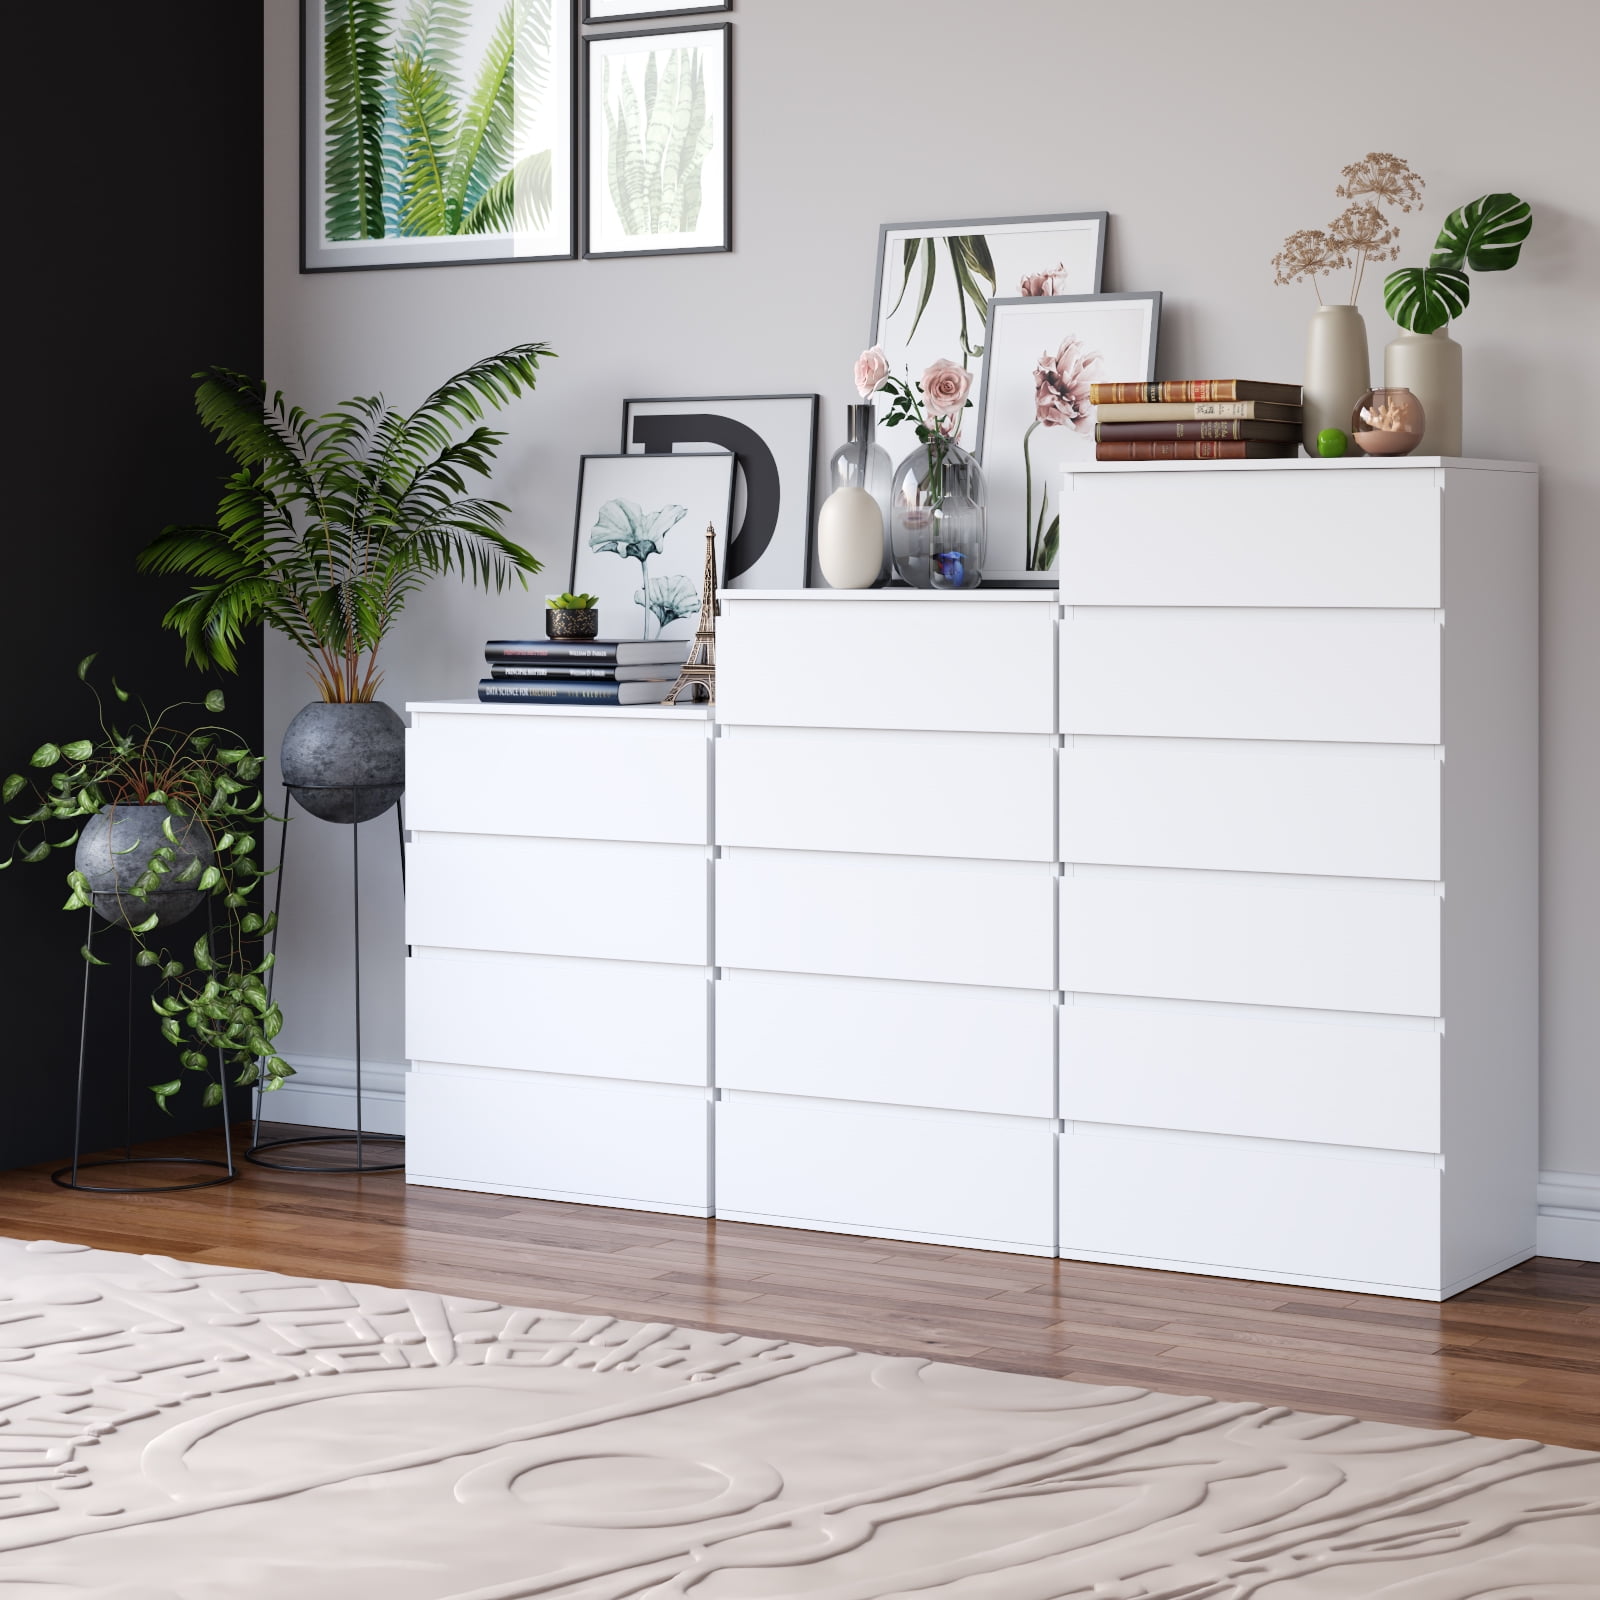 50 x35x70cm Modern Elegant Bedroom Durable Storage Cabinet Room Furniture Bedroom Cabinet for Home & Office & Bedroom & Hallway White Ausla Chest of 5 Drawers